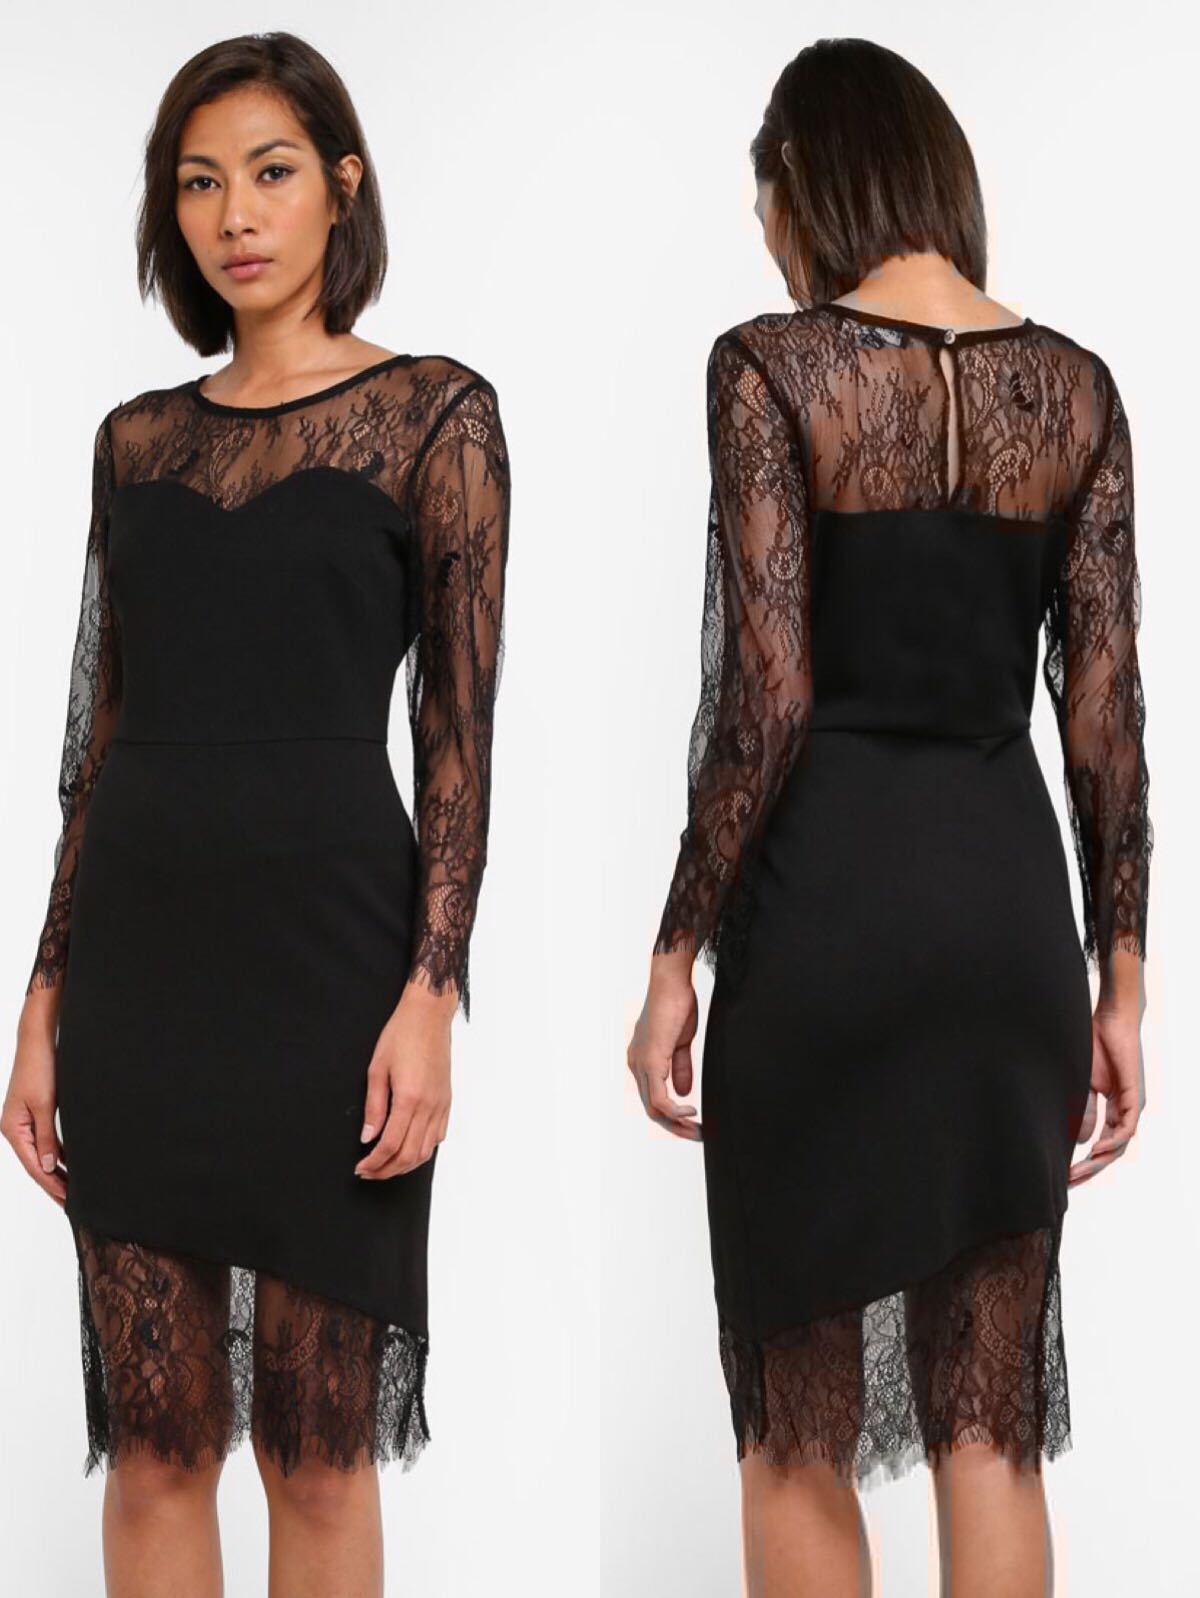 dorothy perkins black lace dress